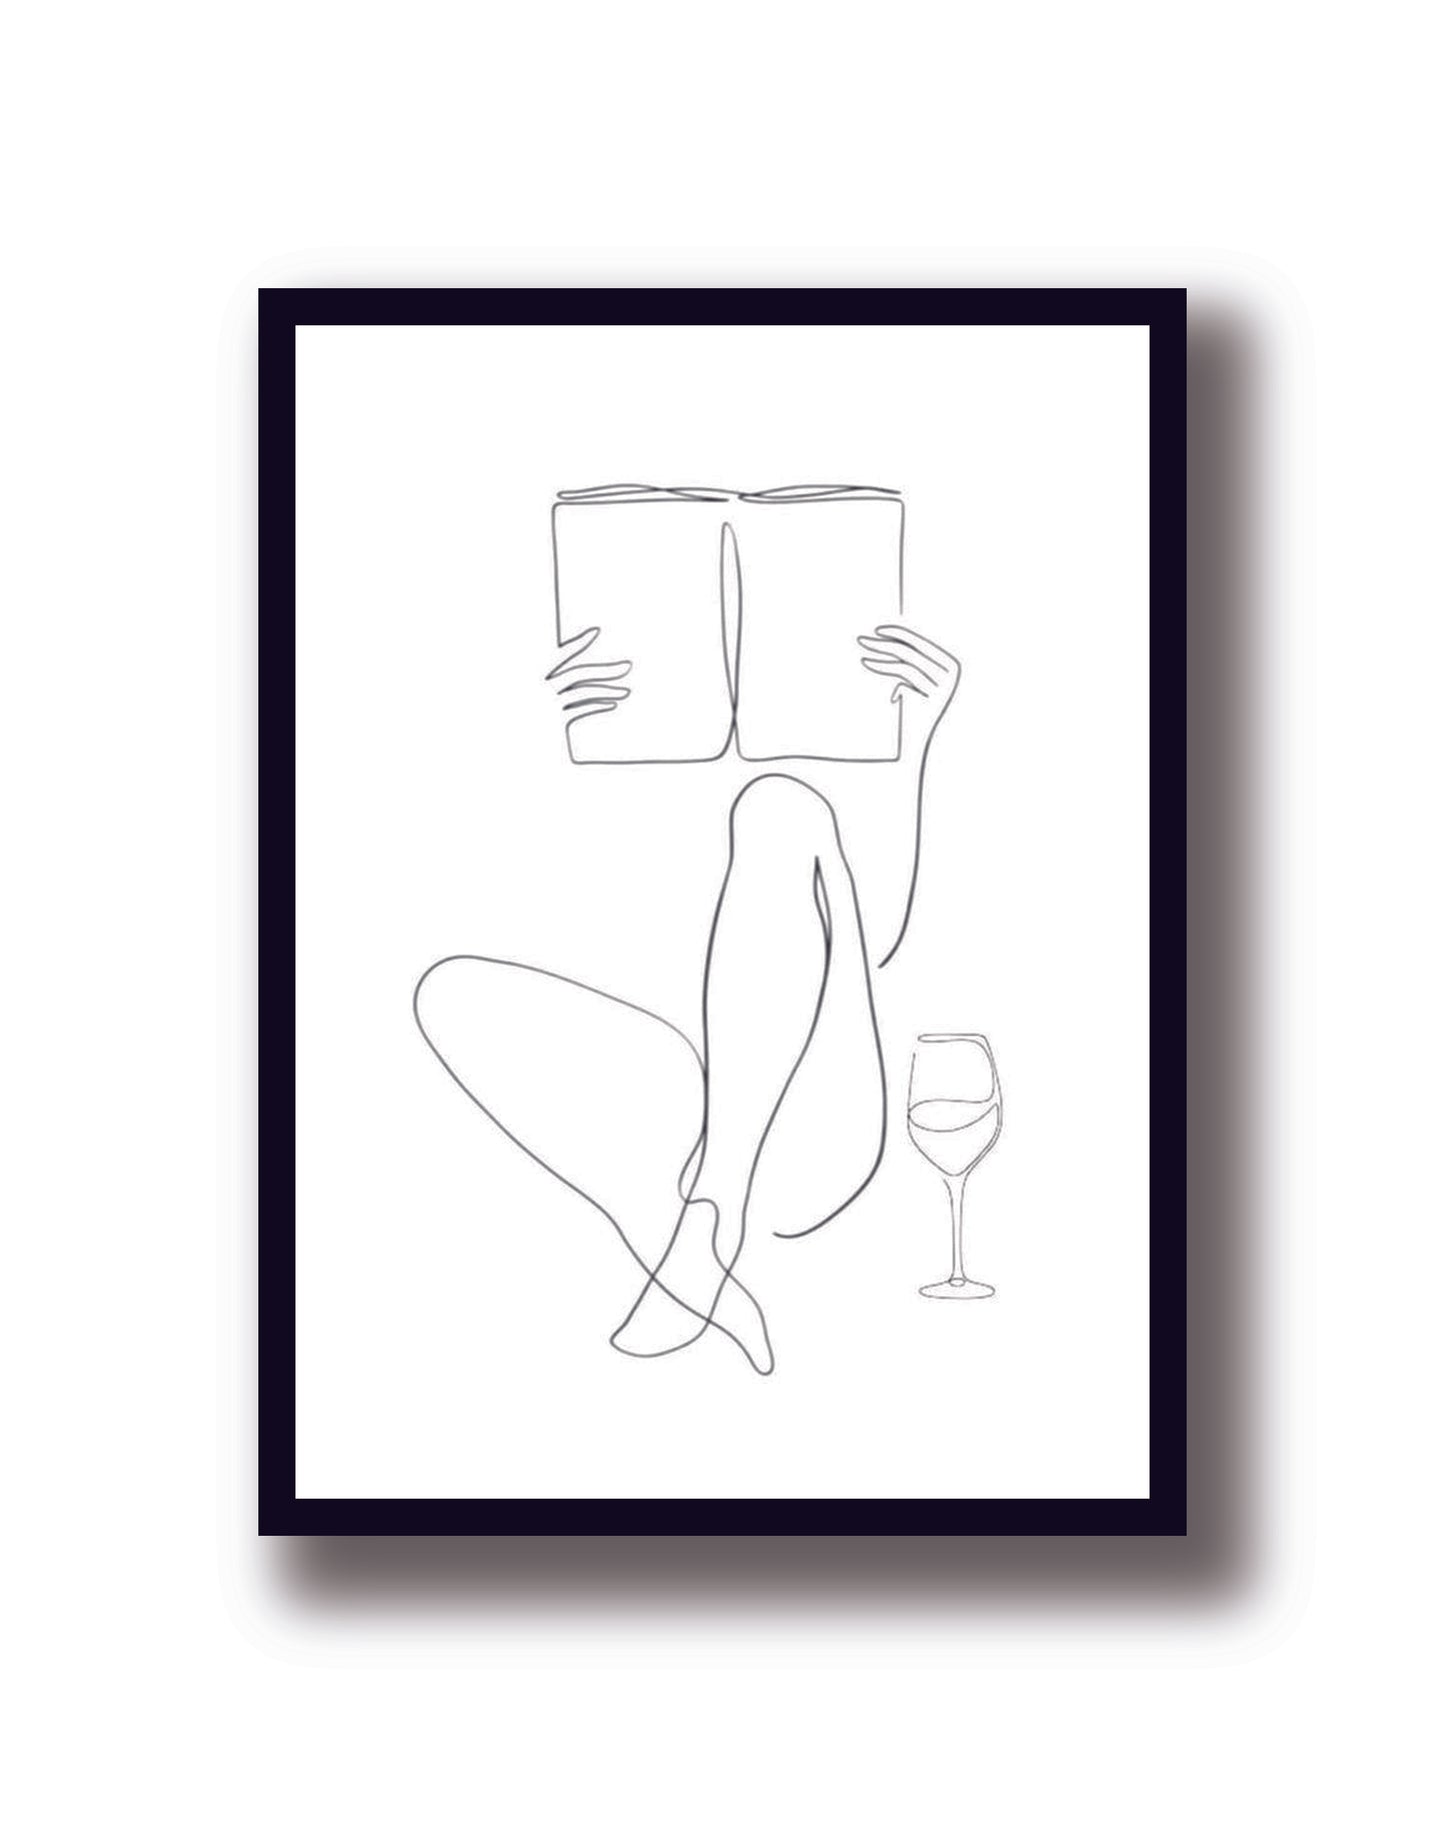 Cuadro Decorativo Libros, Copa de Vino, Lifestyle